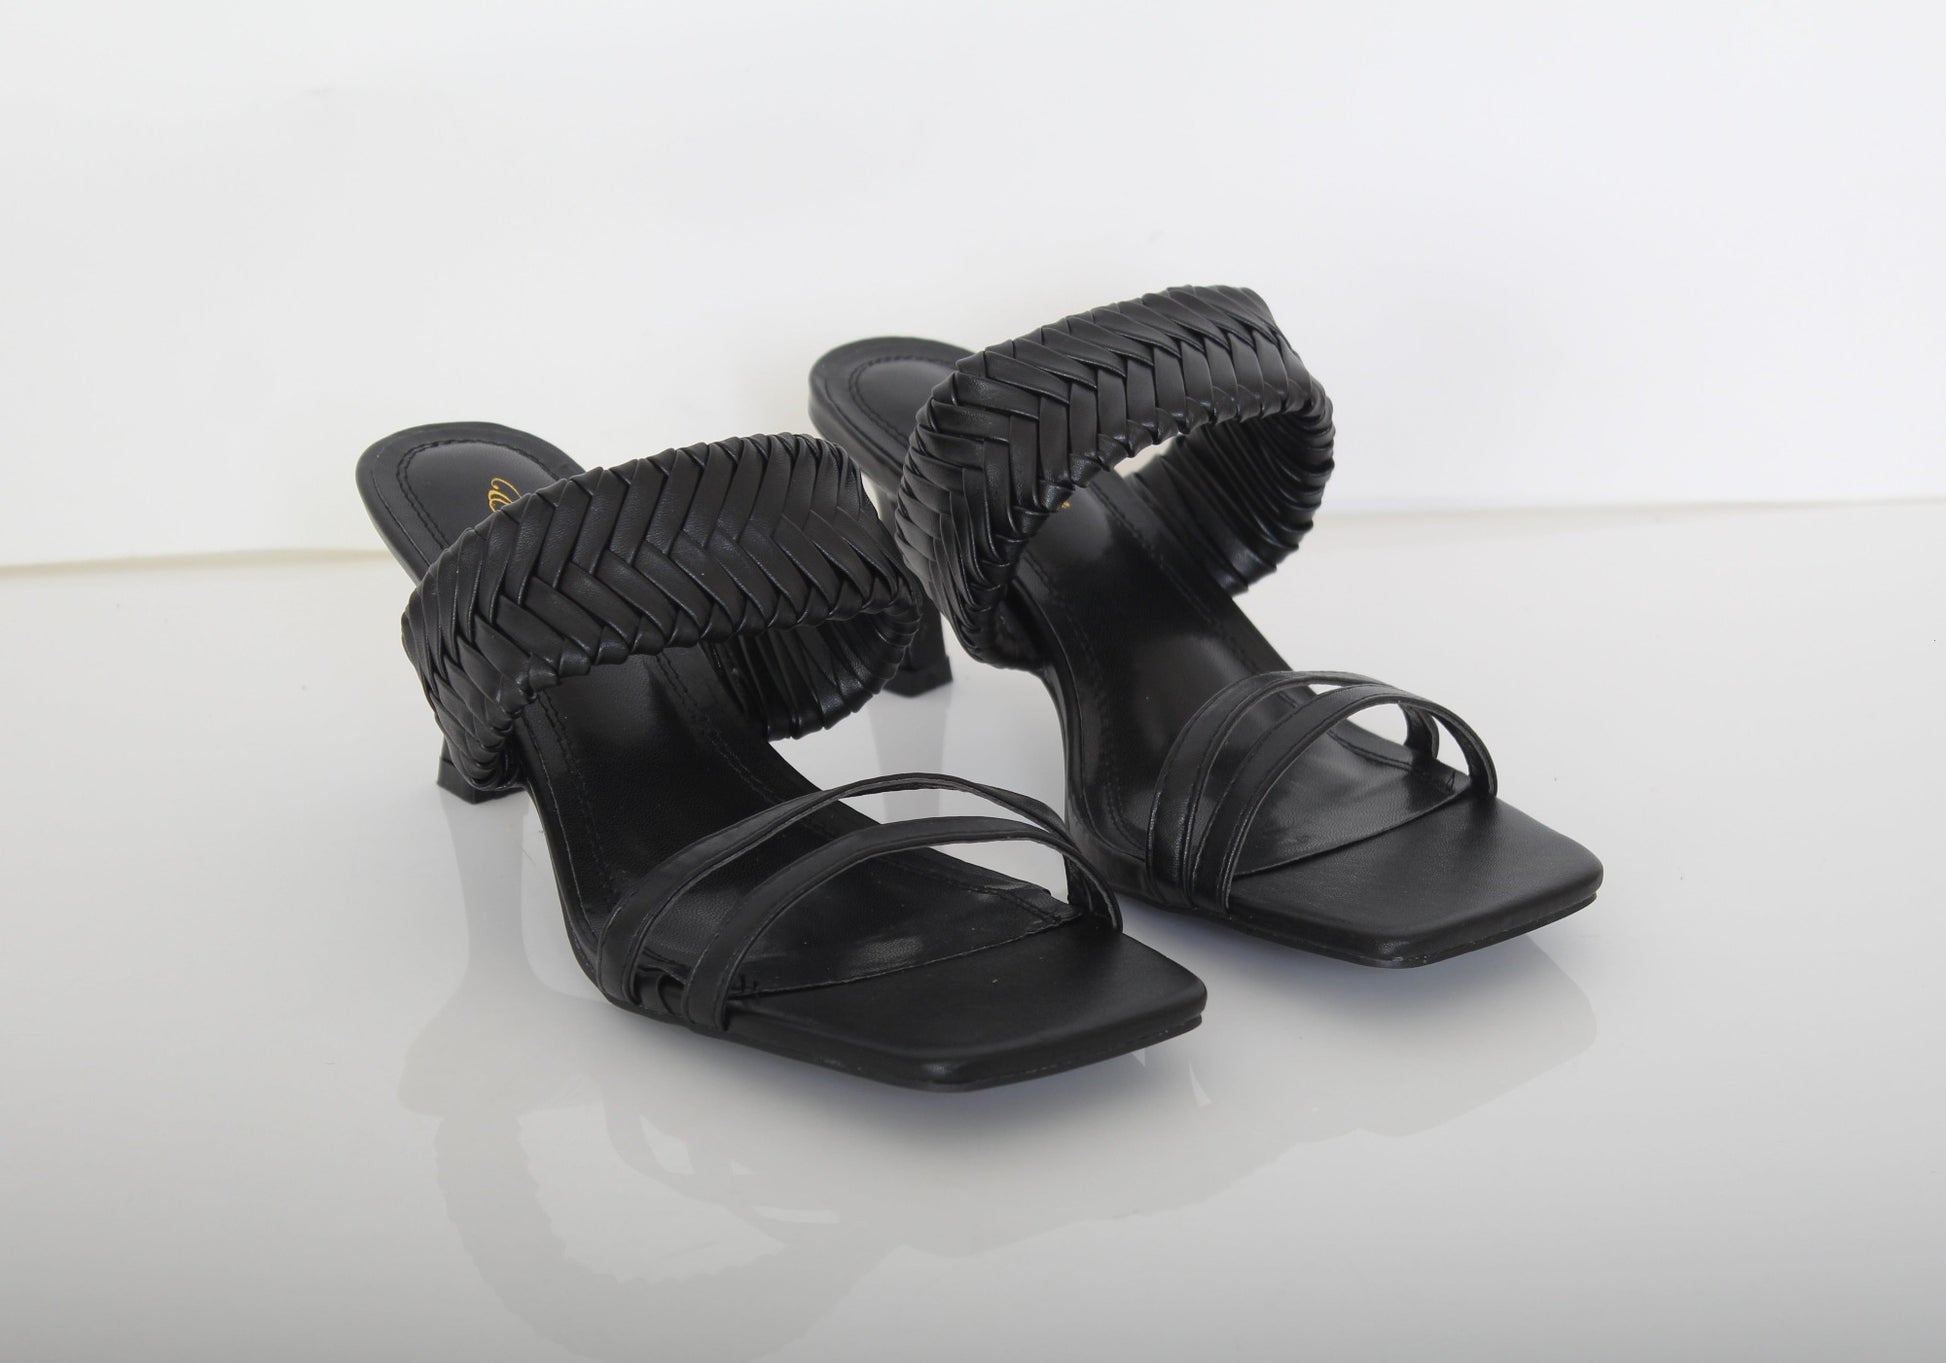 Women open back sandals in black color